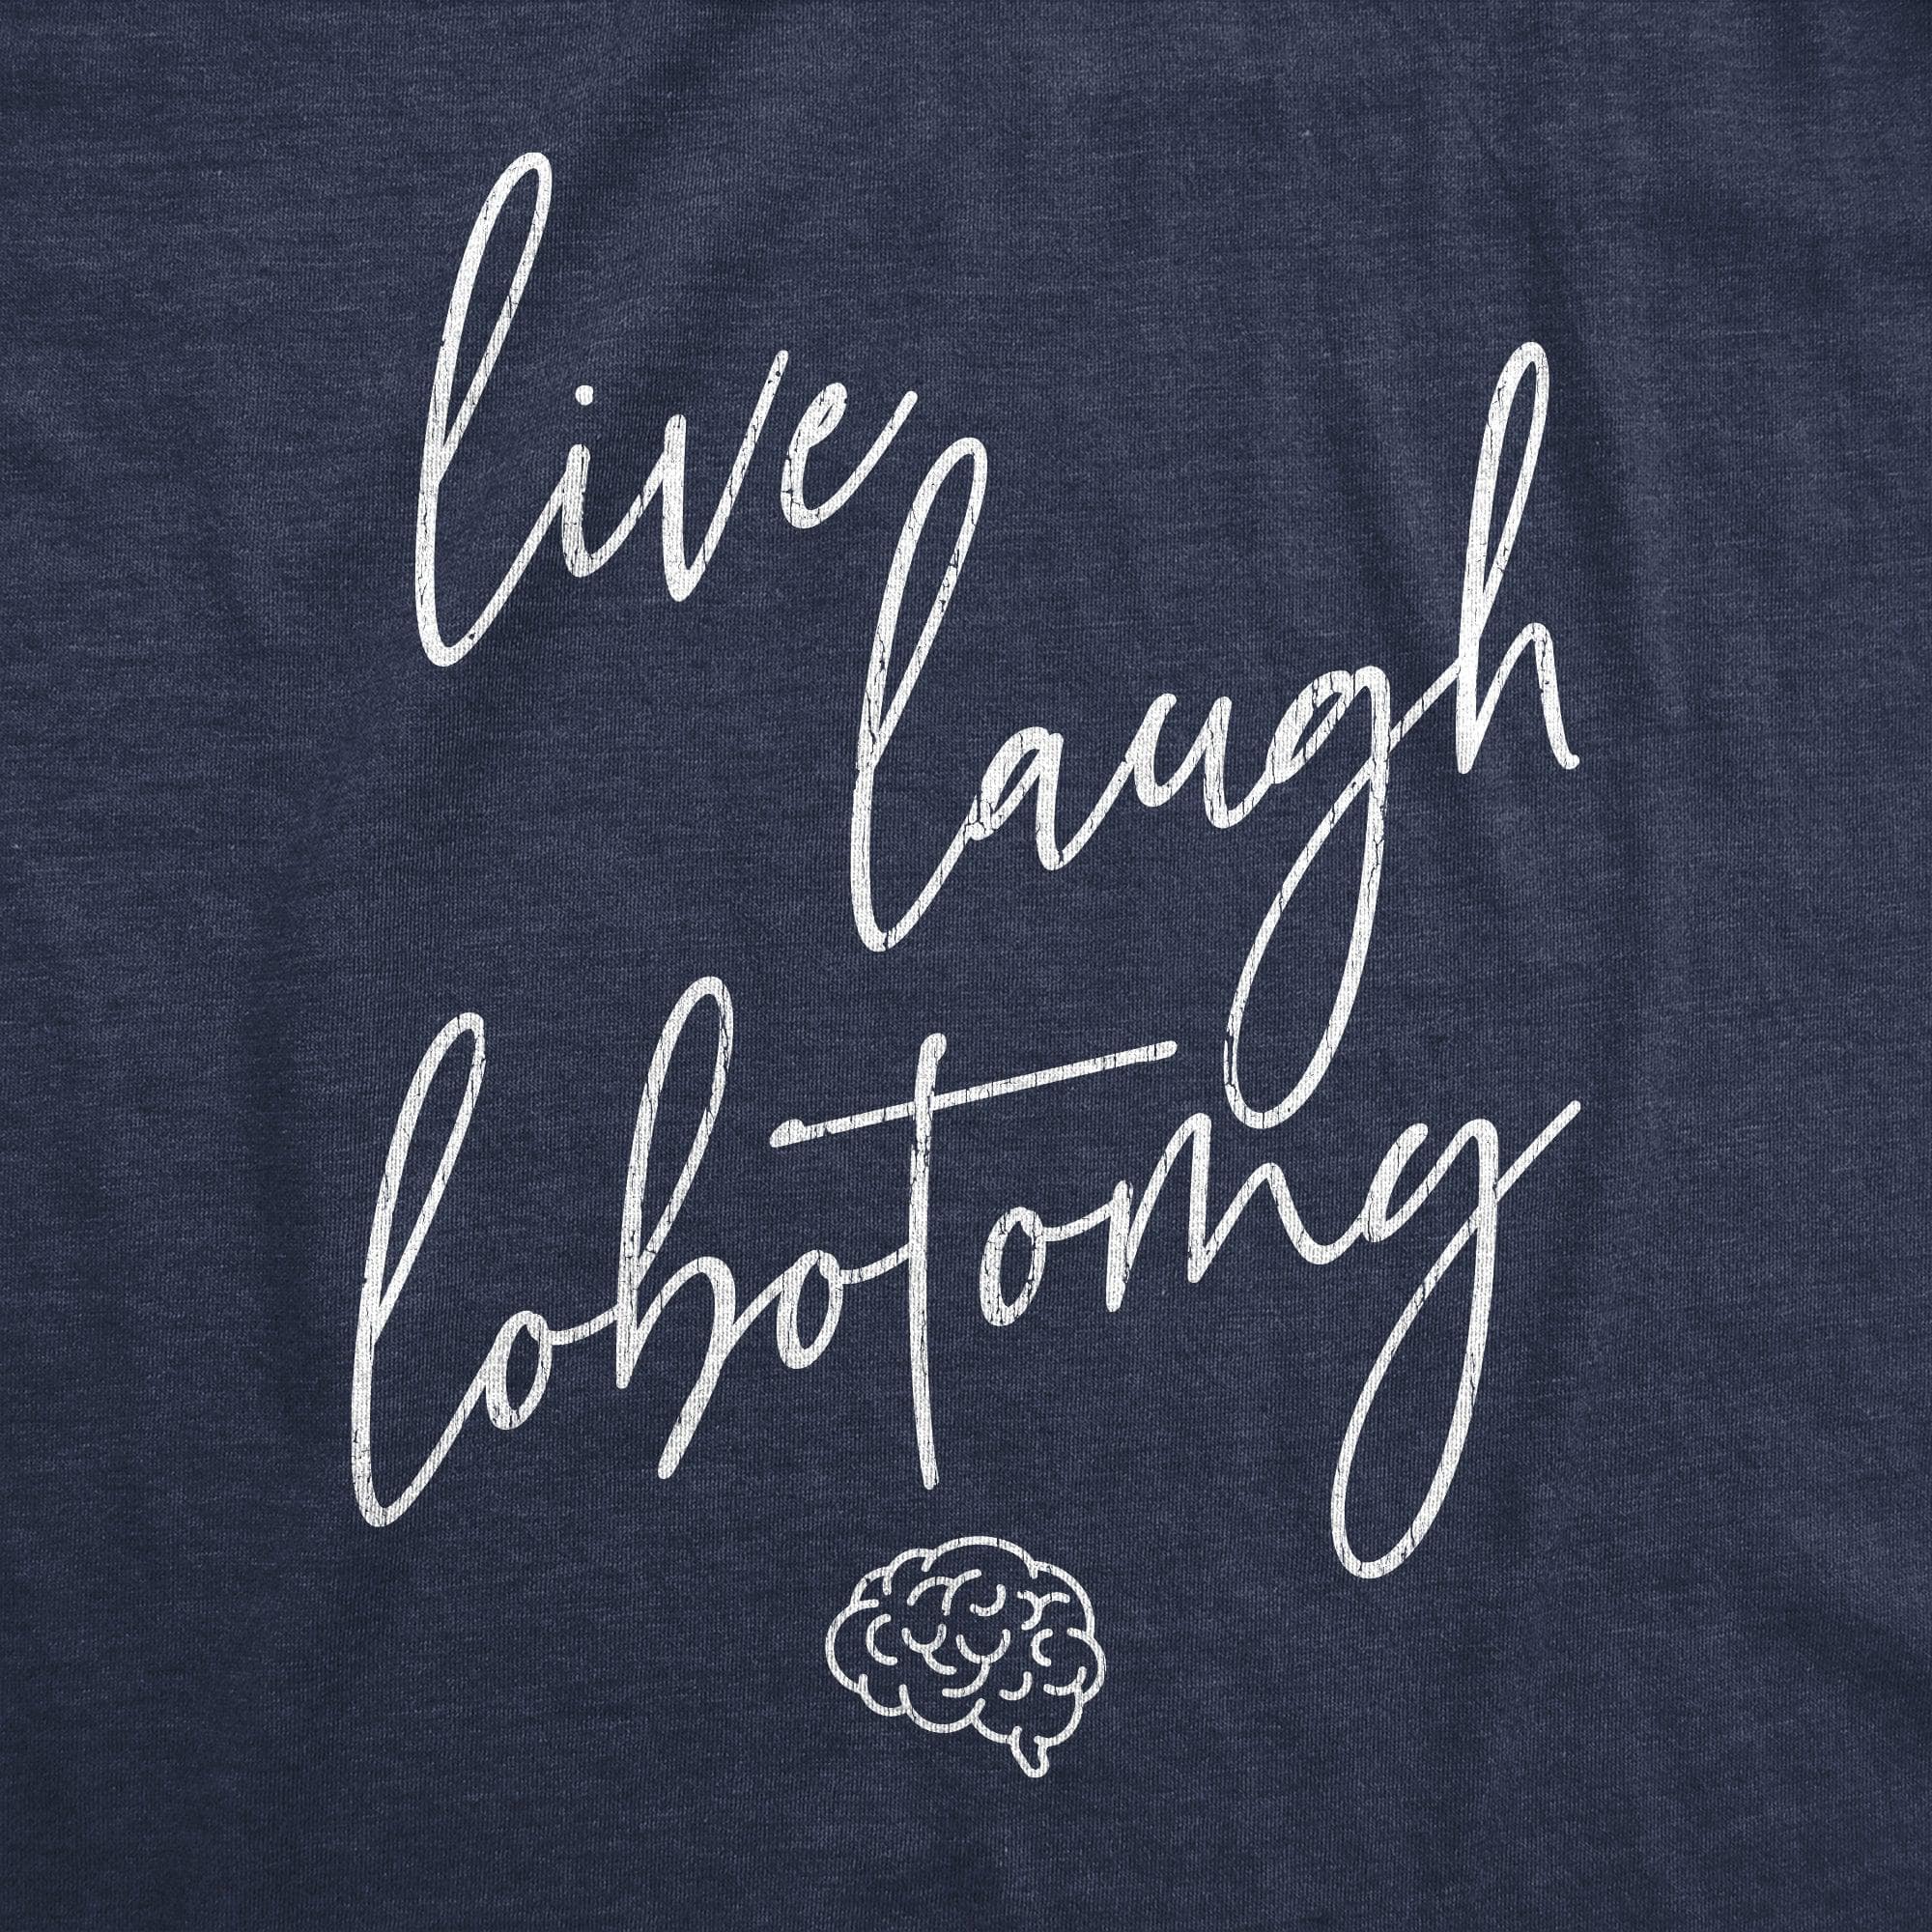 Live Laugh Lobotomy Women's Tshirt  -  Crazy Dog T-Shirts